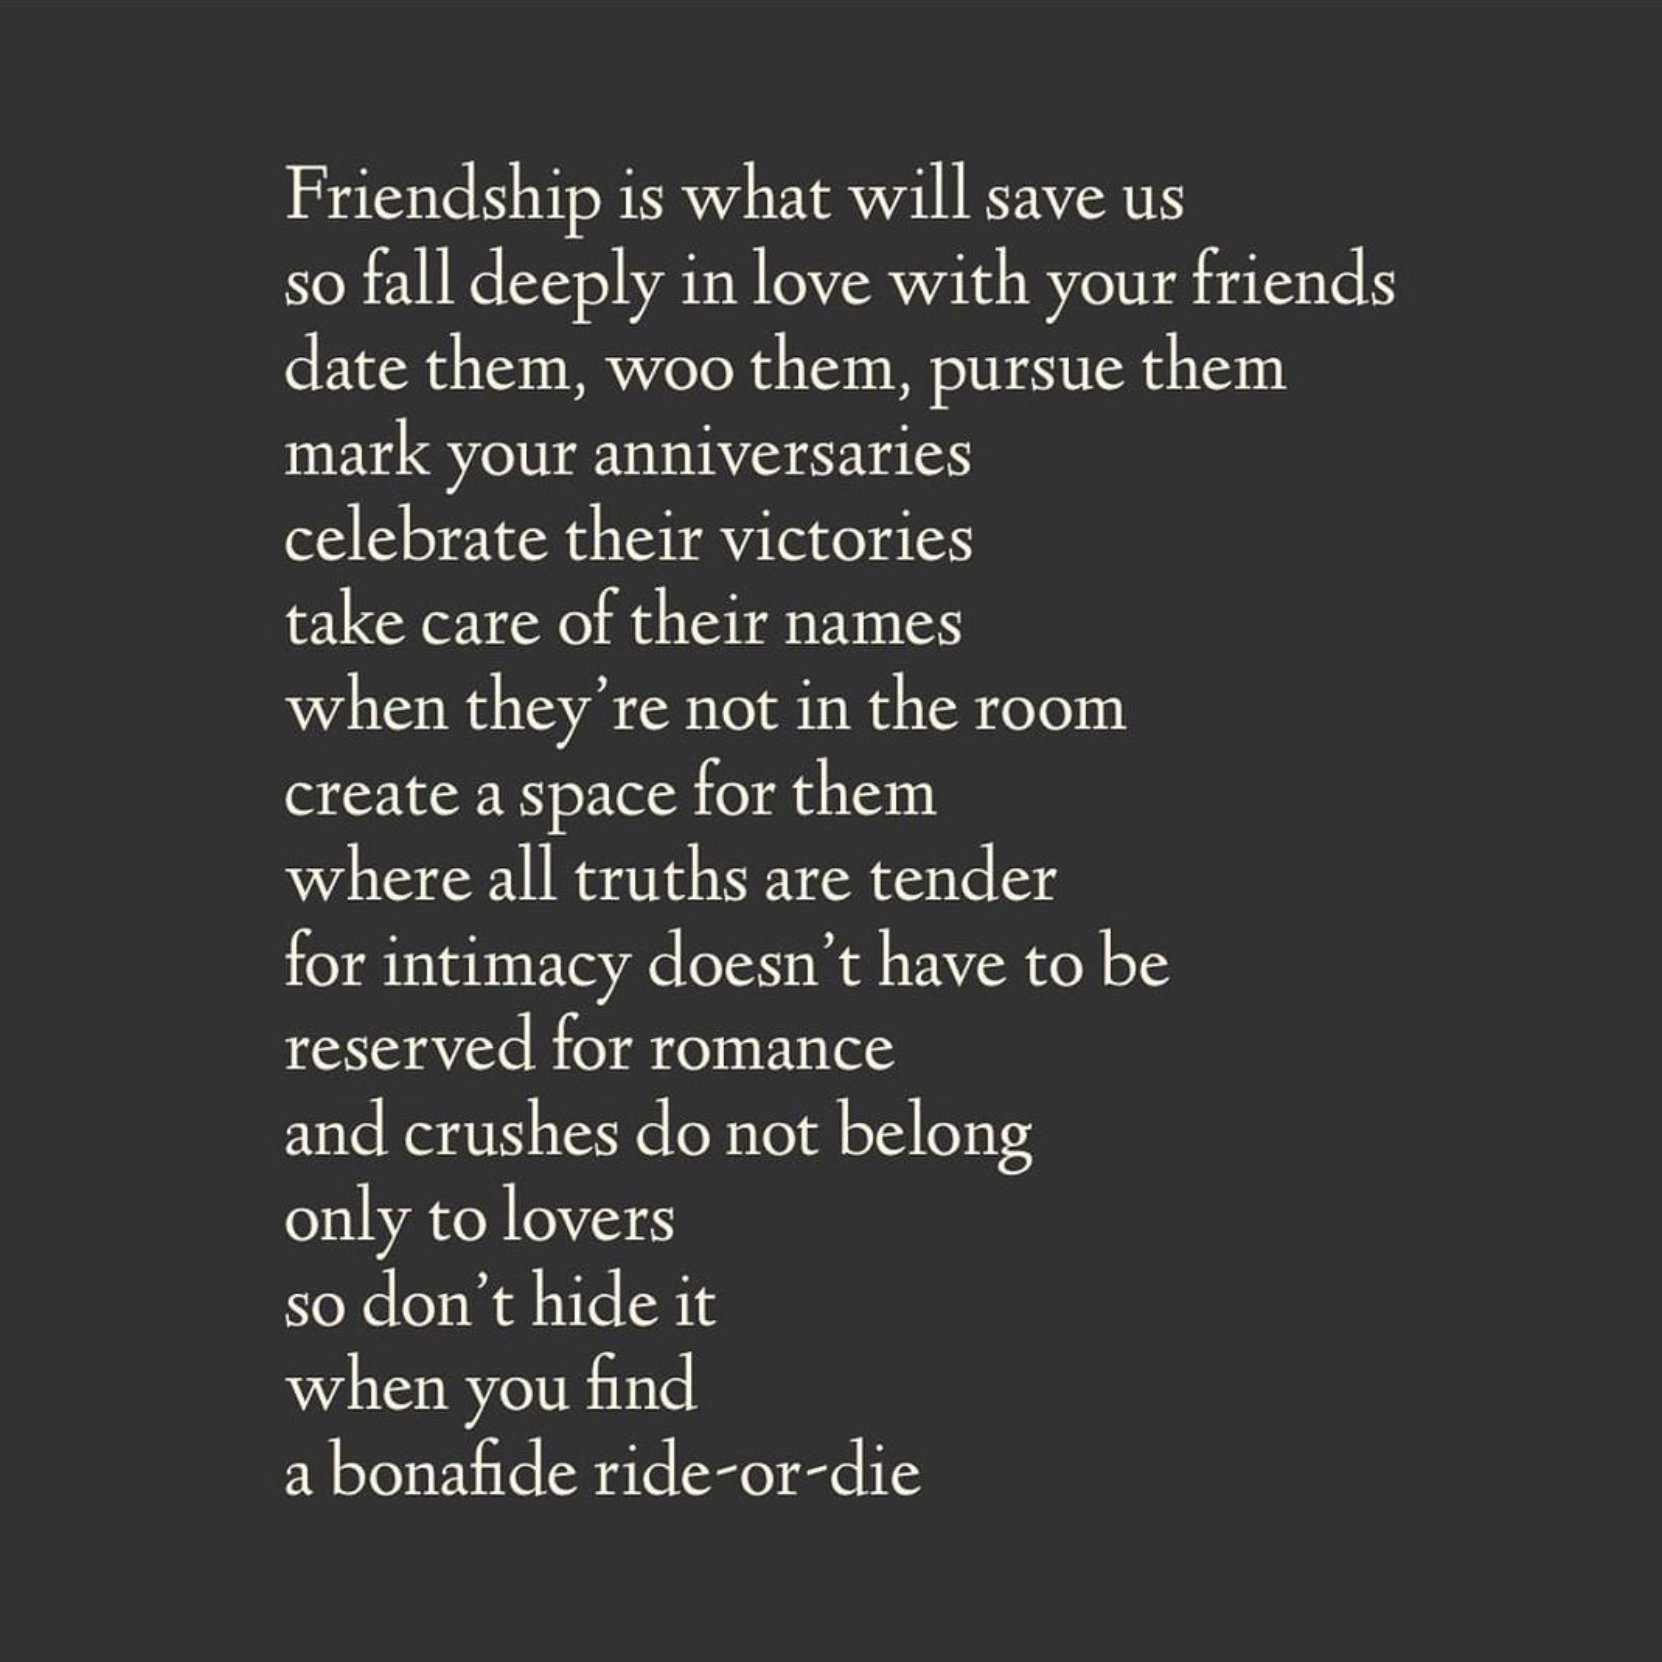 Friendship Quote copy.jpg